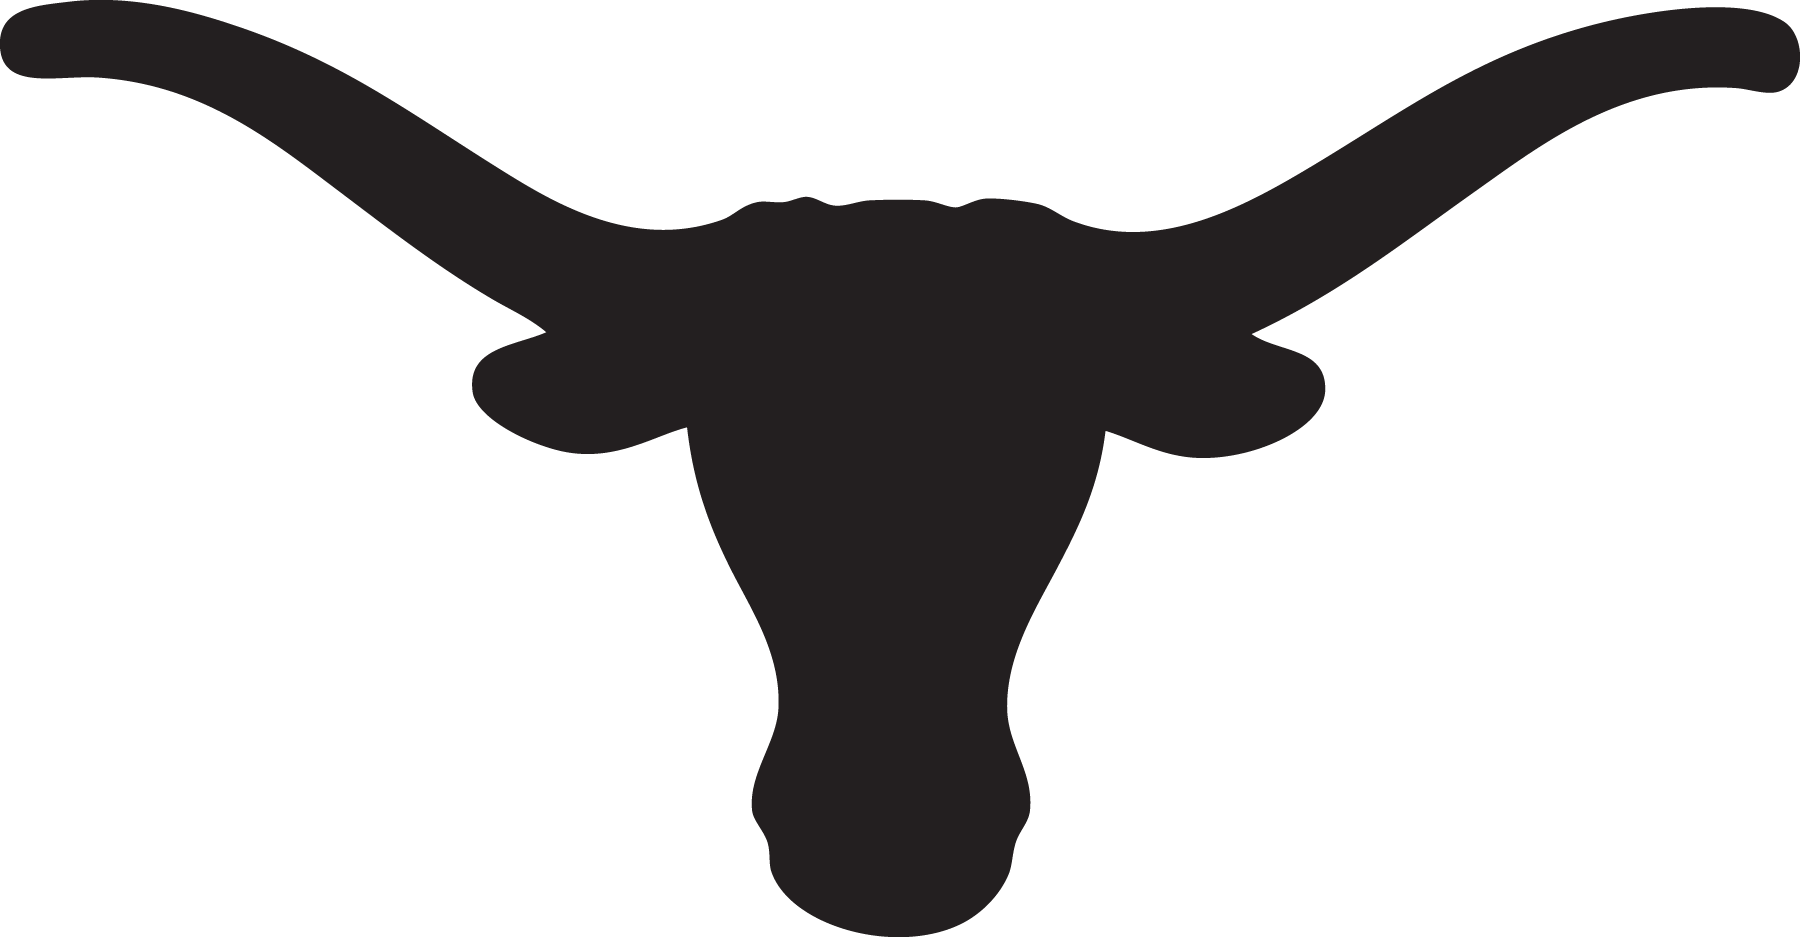 Steer at getdrawings com. Wrestlers clipart silhouette